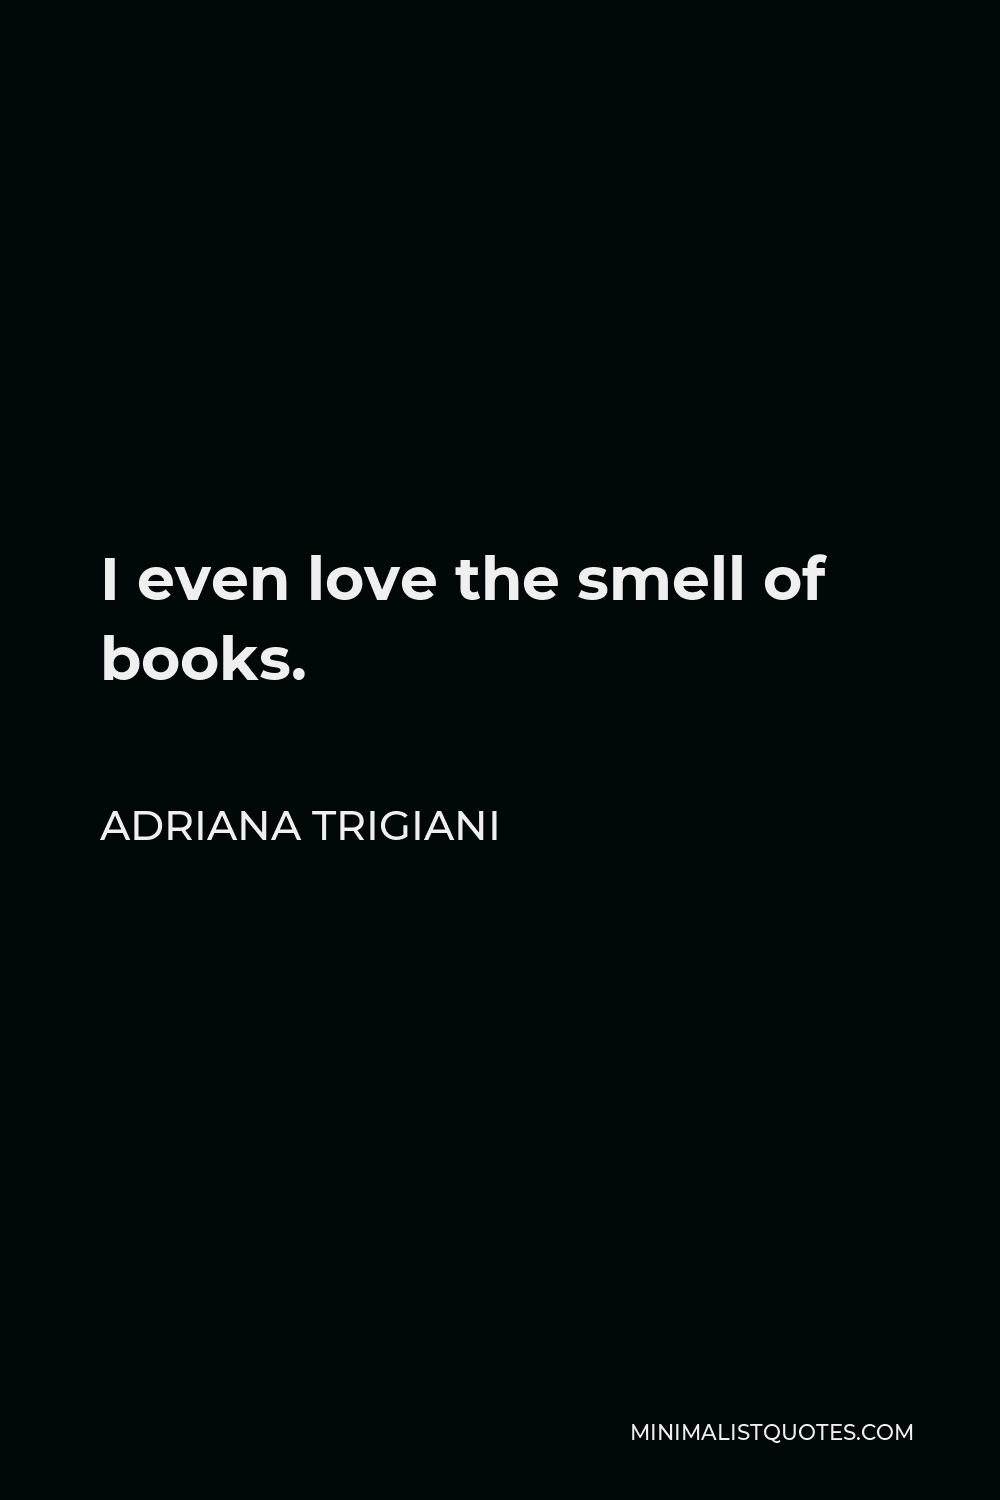 Adriana Trigiani Quote - I even love the smell of books.